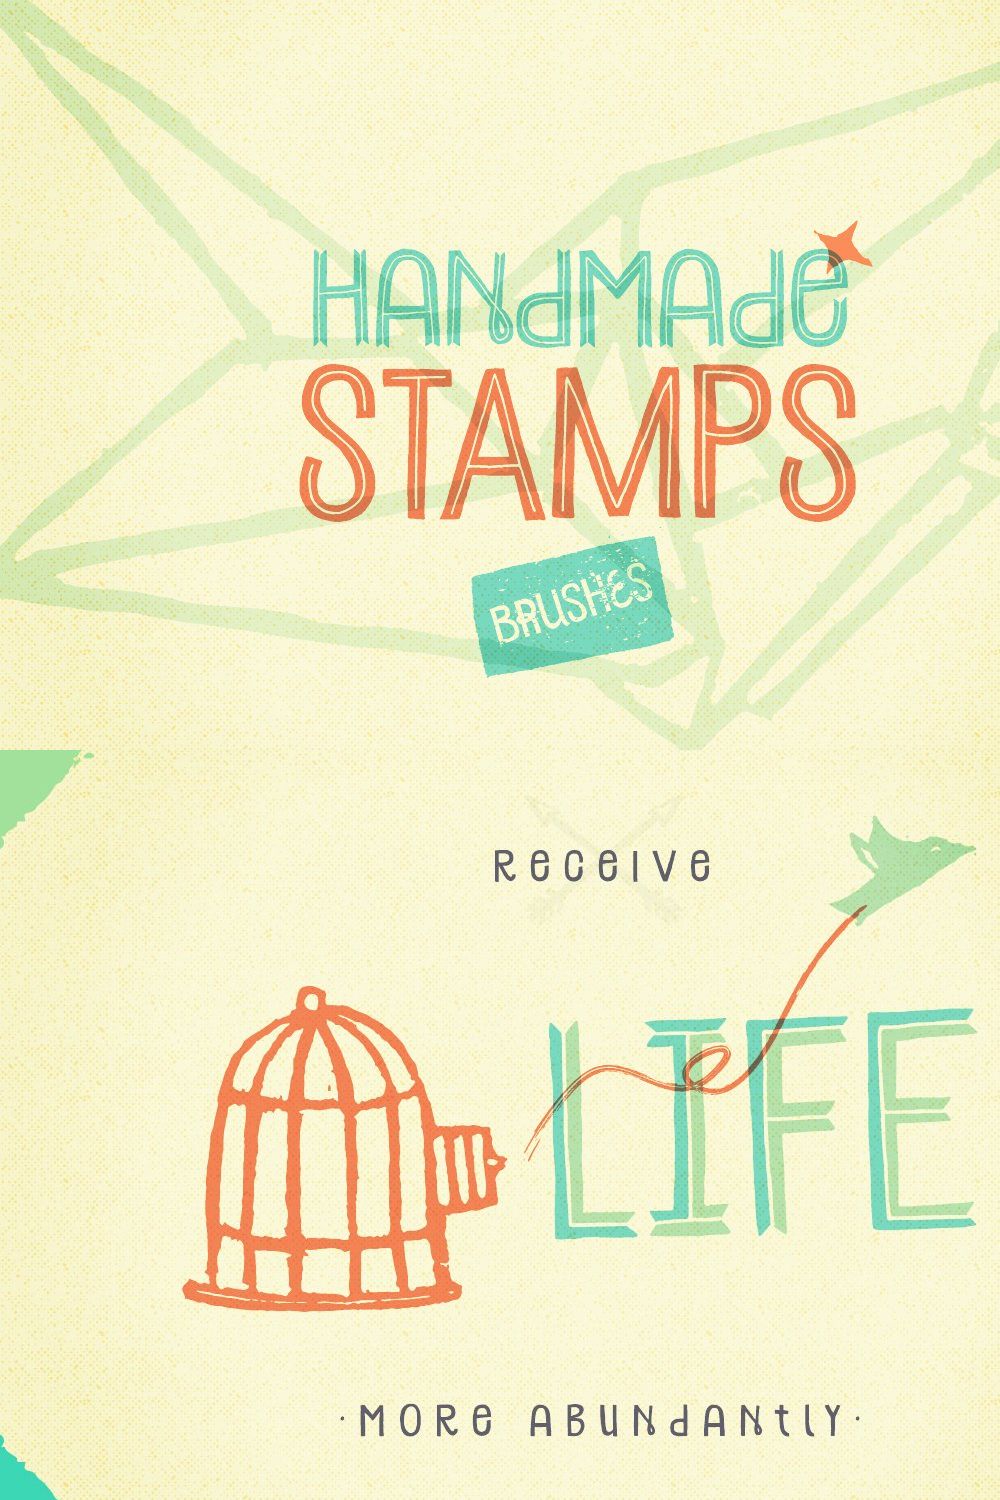 48 Handmade Stamp Brushes pinterest preview image.